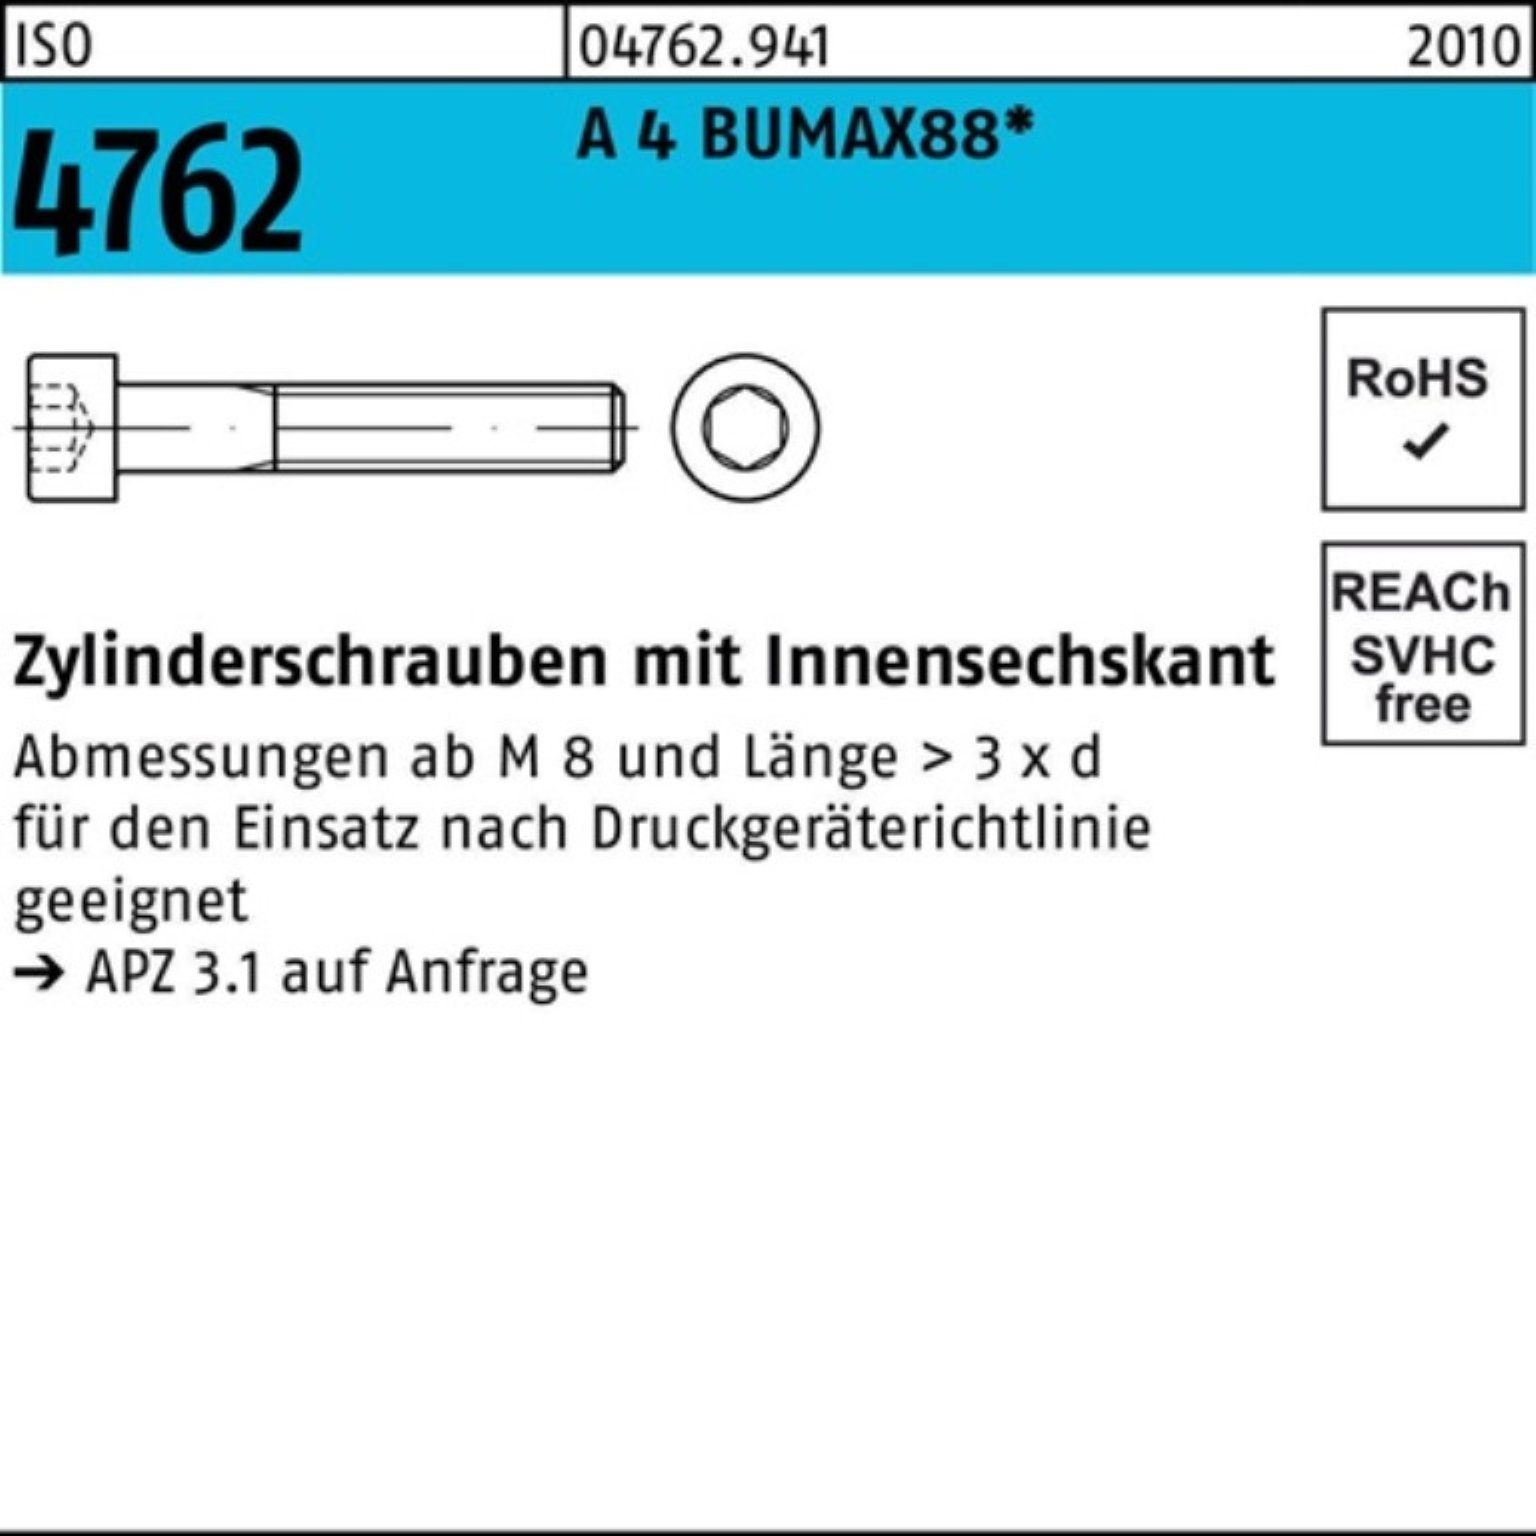 Bufab Zylinderschraube 100er Pack Zylinderschraube M5x ISO 4762 BUMAX88 4 A 12 100 Innen-6kt